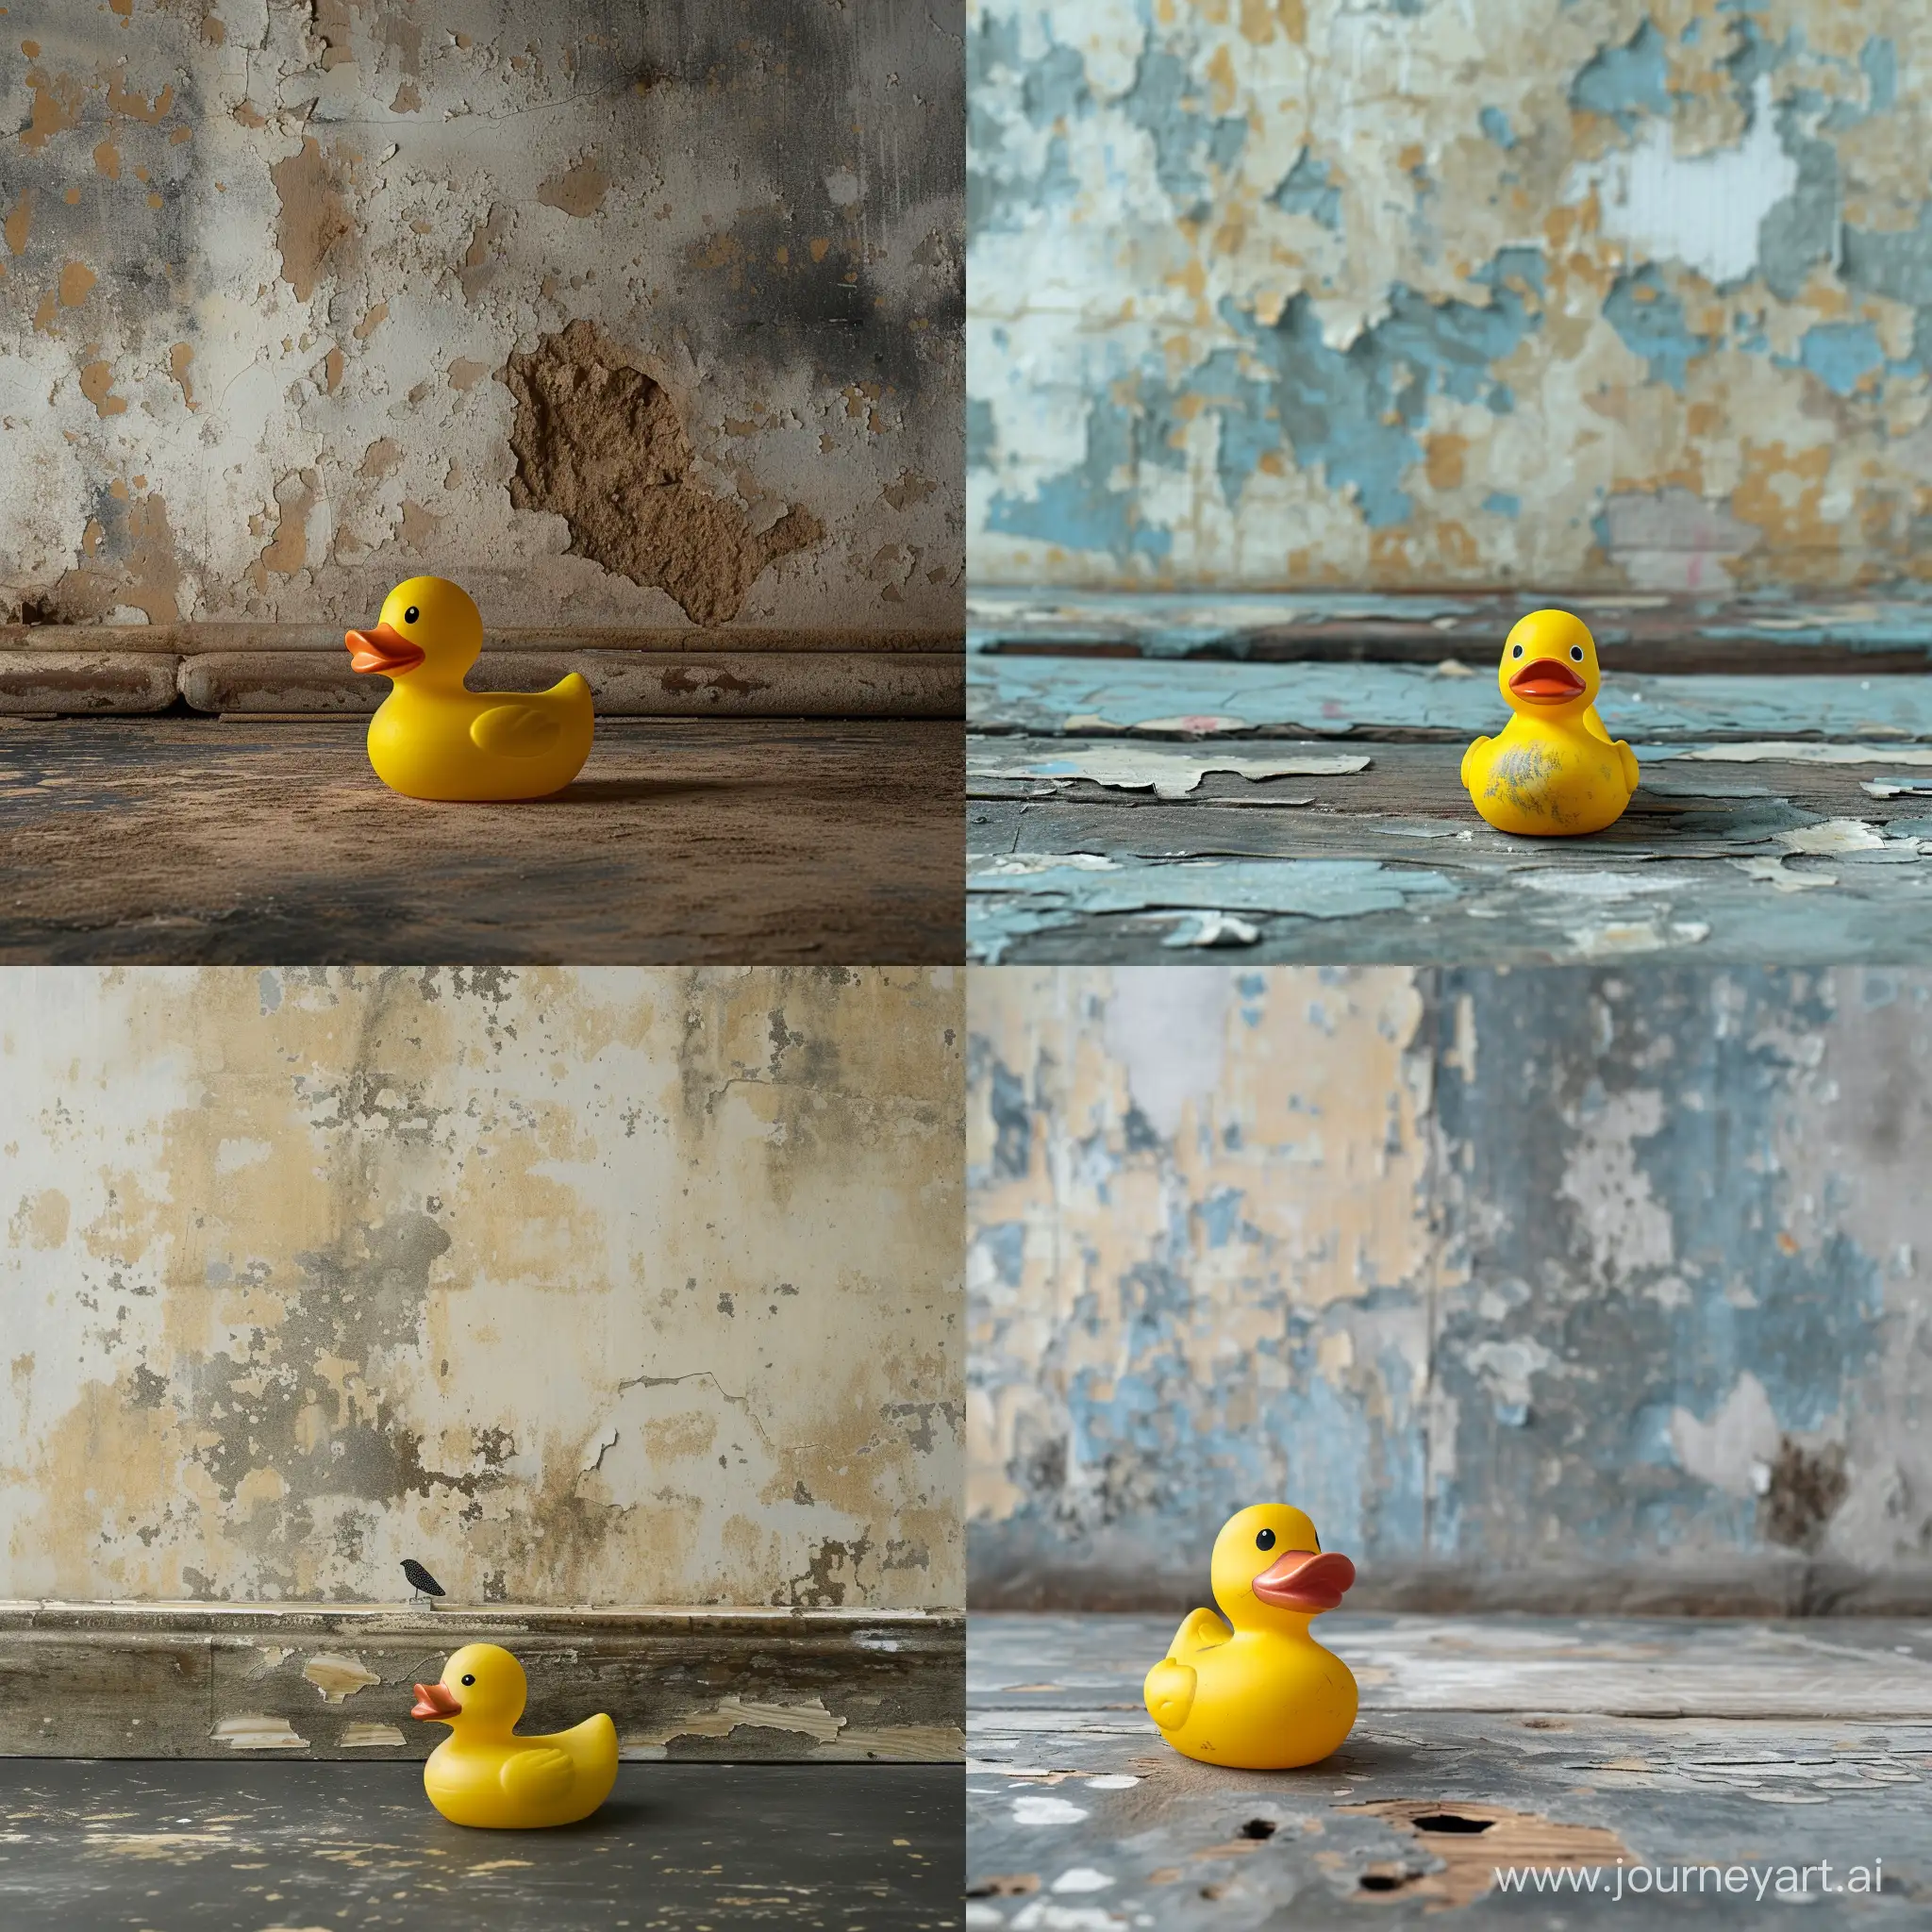 Dark-Fantasy-Rubber-Duck-Against-Worn-Wall-Mysterious-Bird-Style